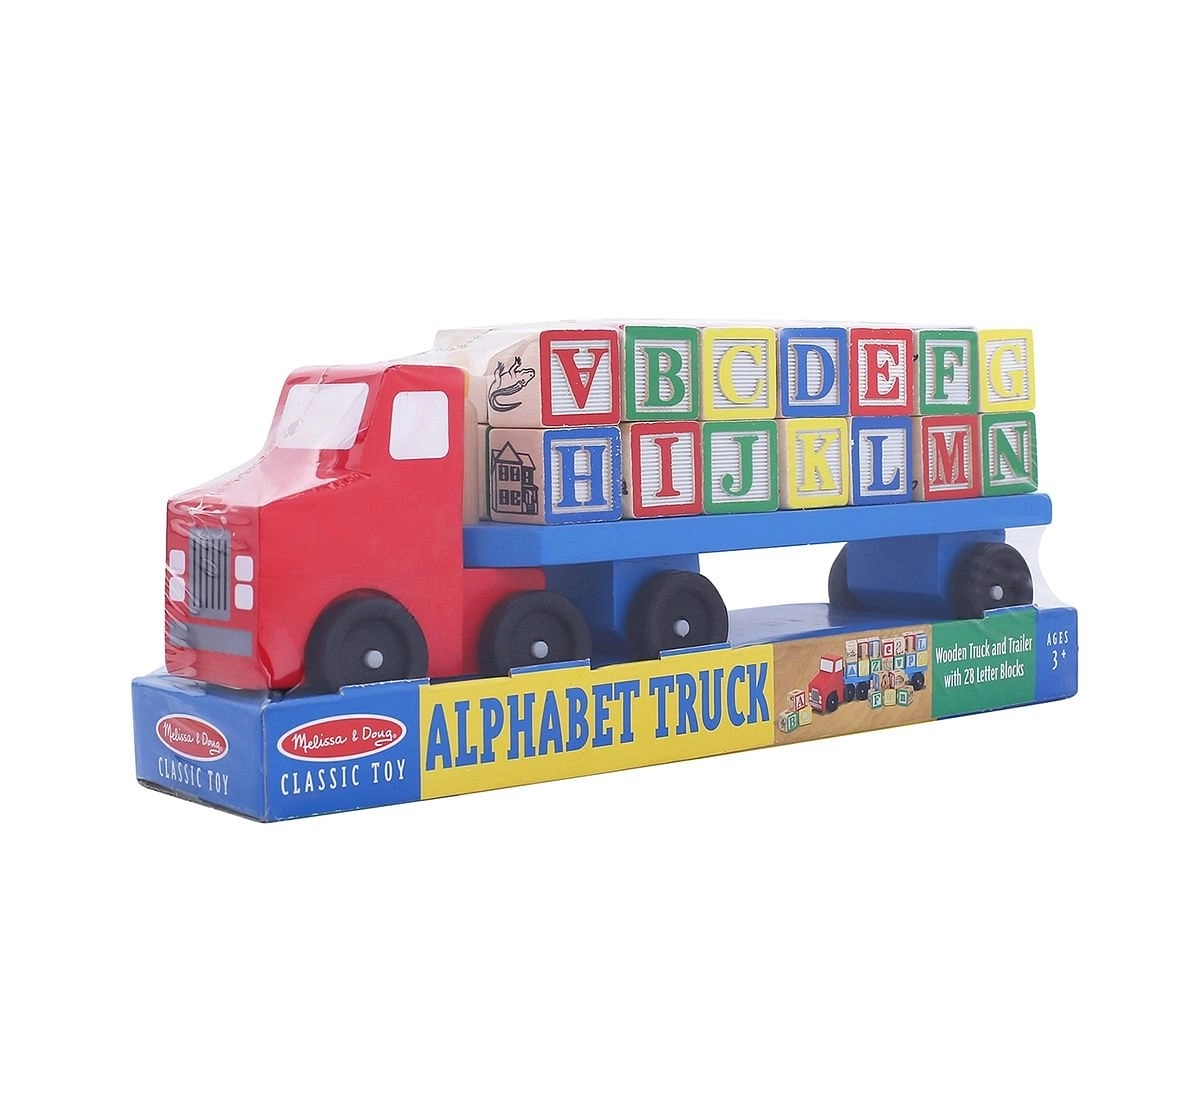  Melissa & Doug Alphabet Truck Wooden Toys for Kids age 3Y+ 